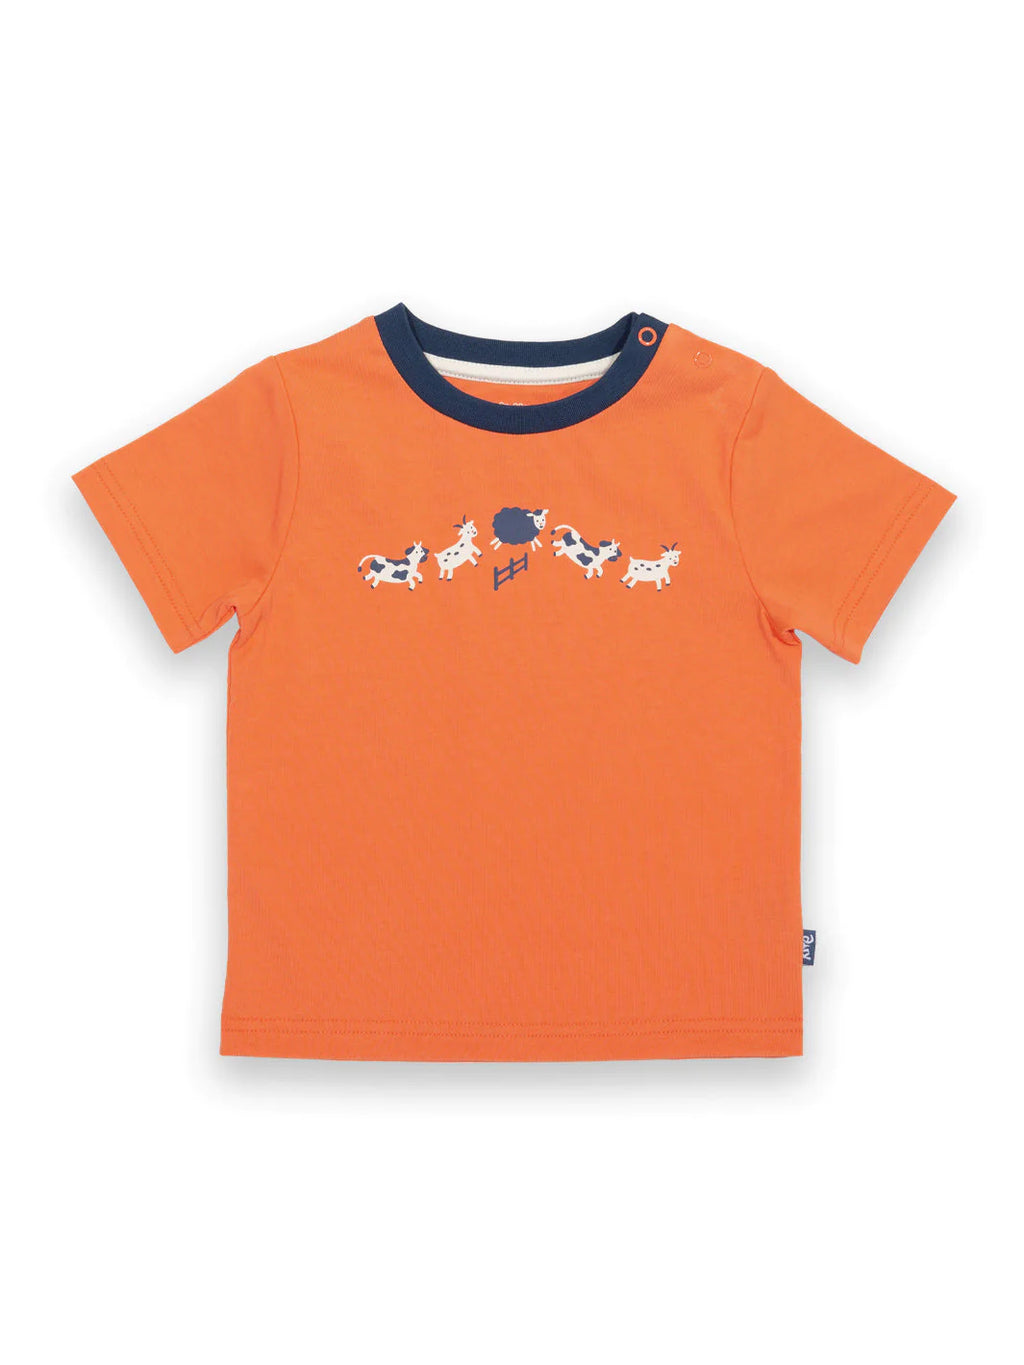 Kite Boys Farm Fun T-shirt Orange | New Season